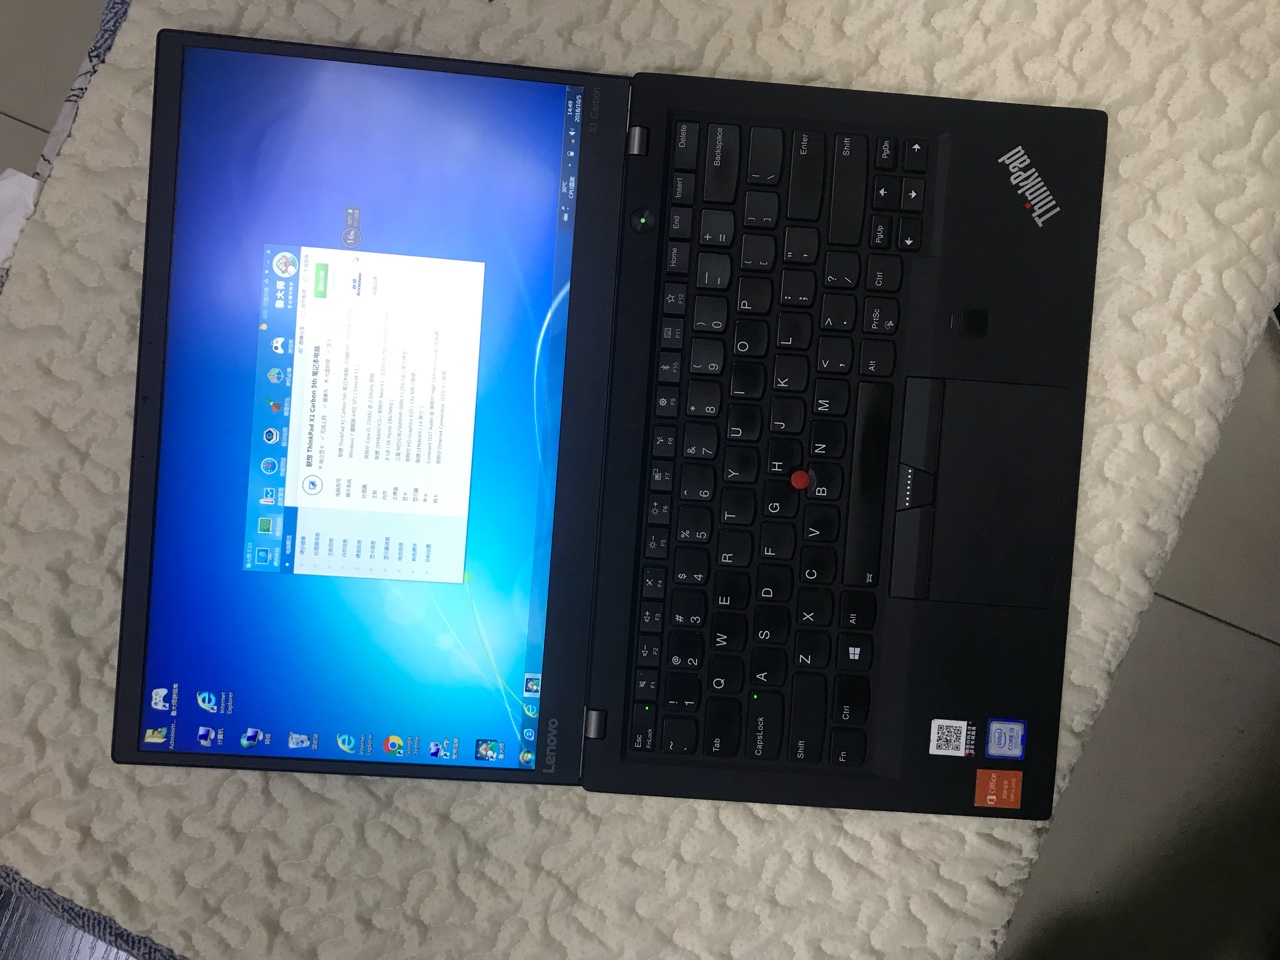 ThinkPad X1 Carbon (07CD) 14寸 电池损耗百分之零点八